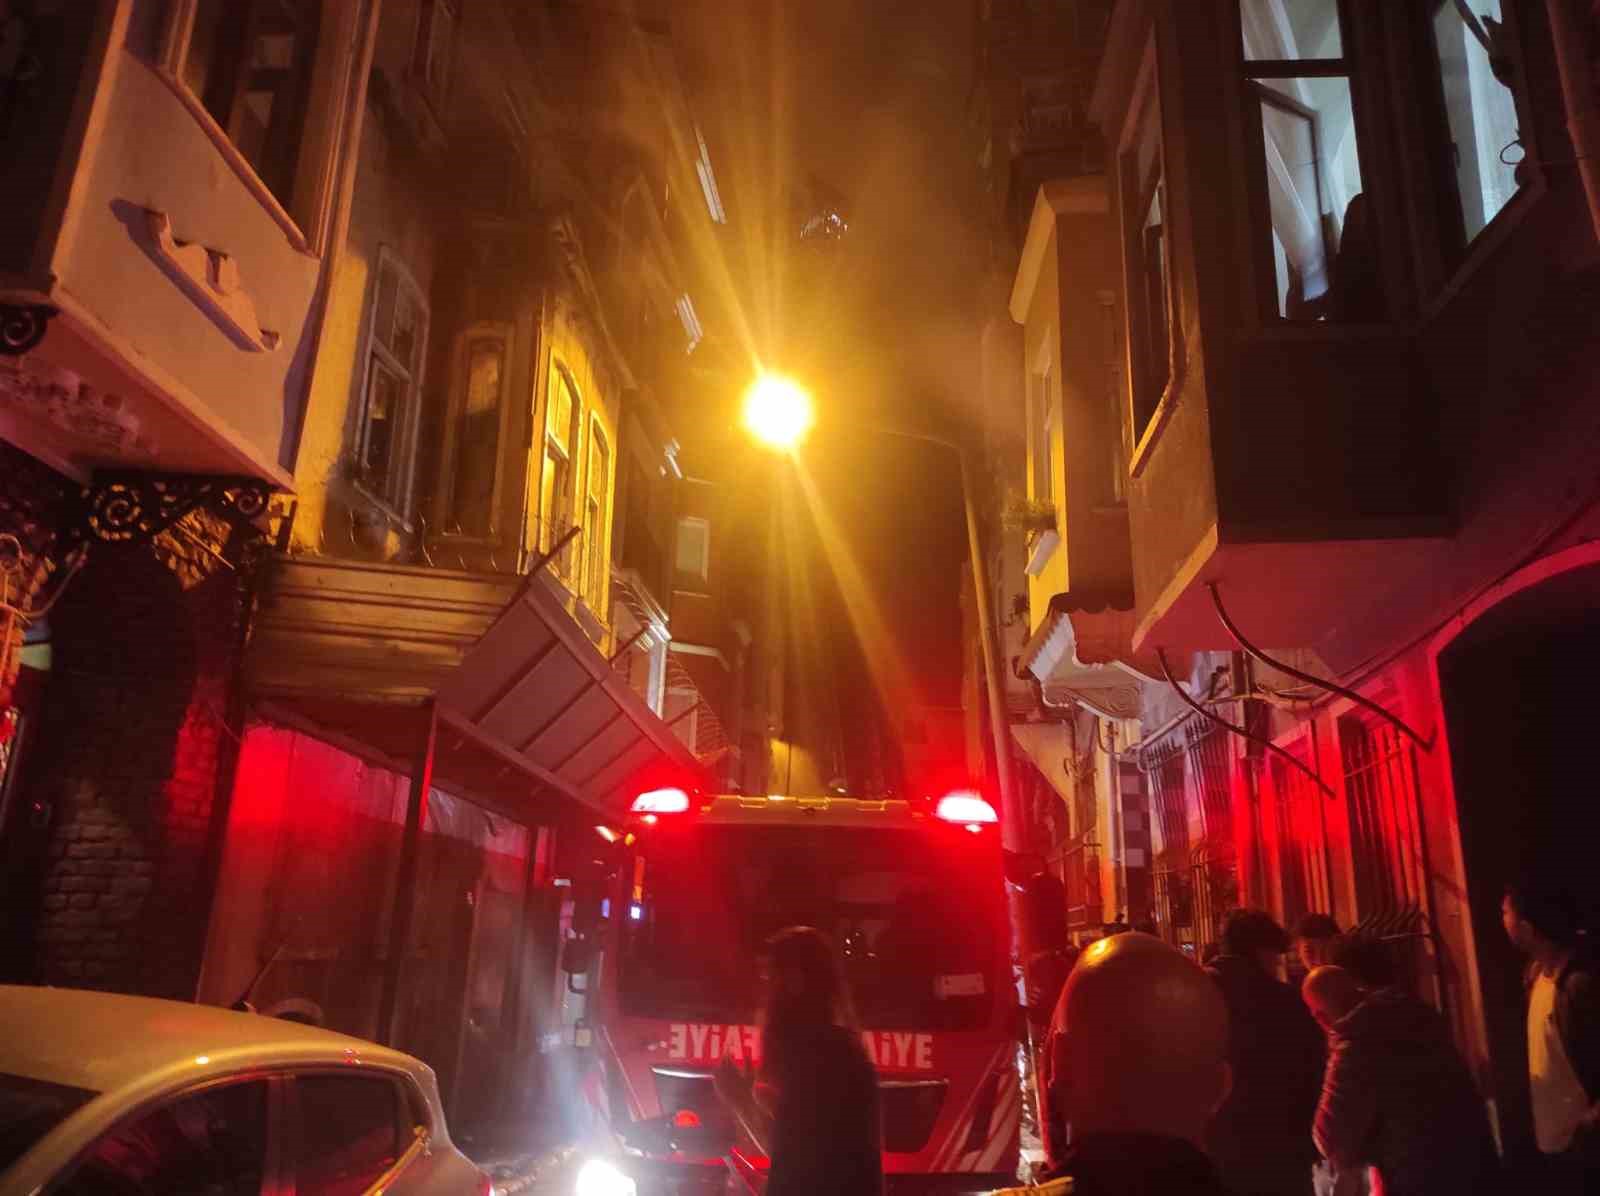 Beyoğlu’nda 4 katlı bina alev alev yandı
